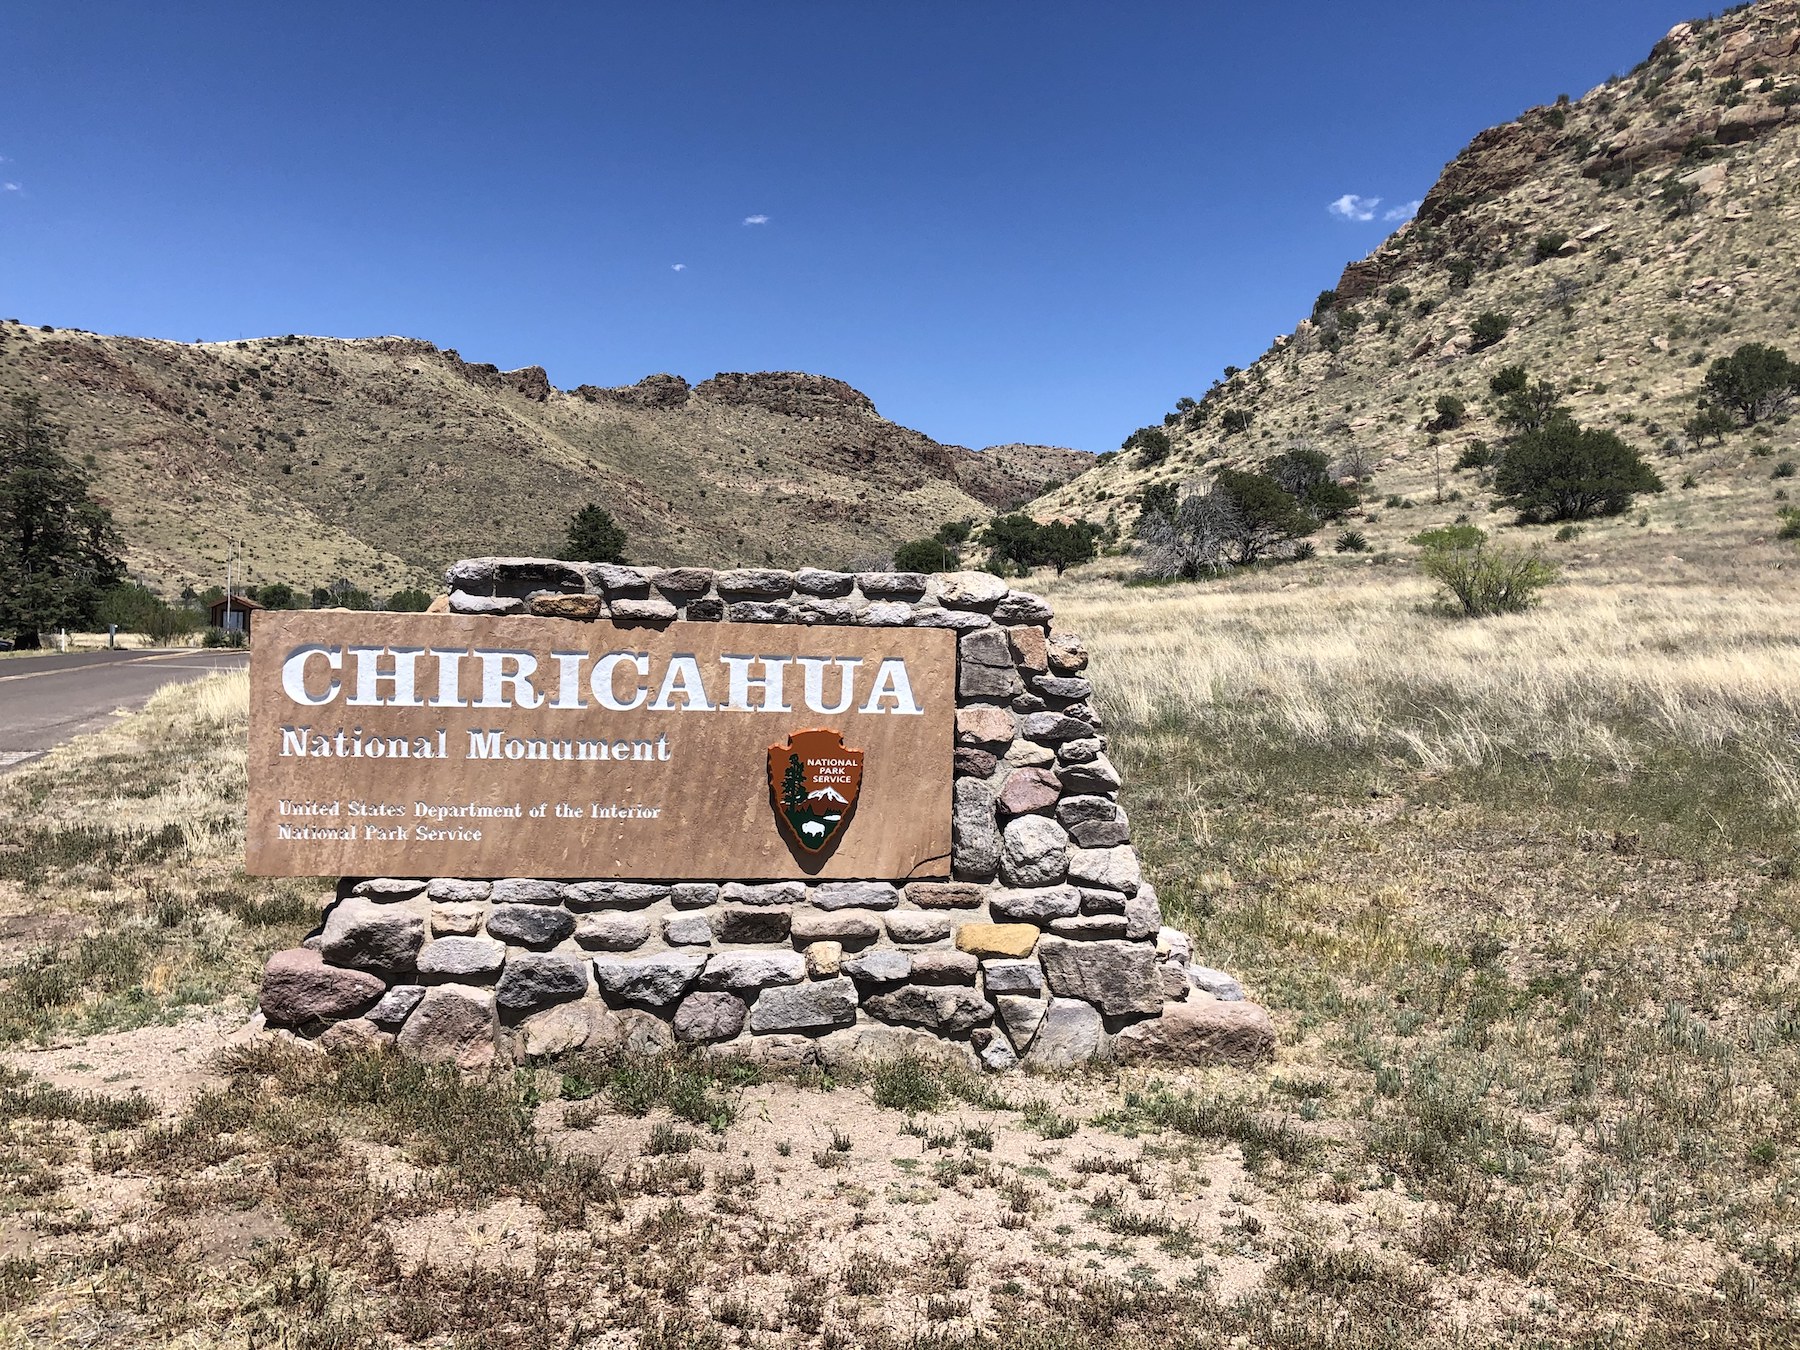 Monumento nacional de Chiricahua: 9 cosas que saber antes de visitar - 473